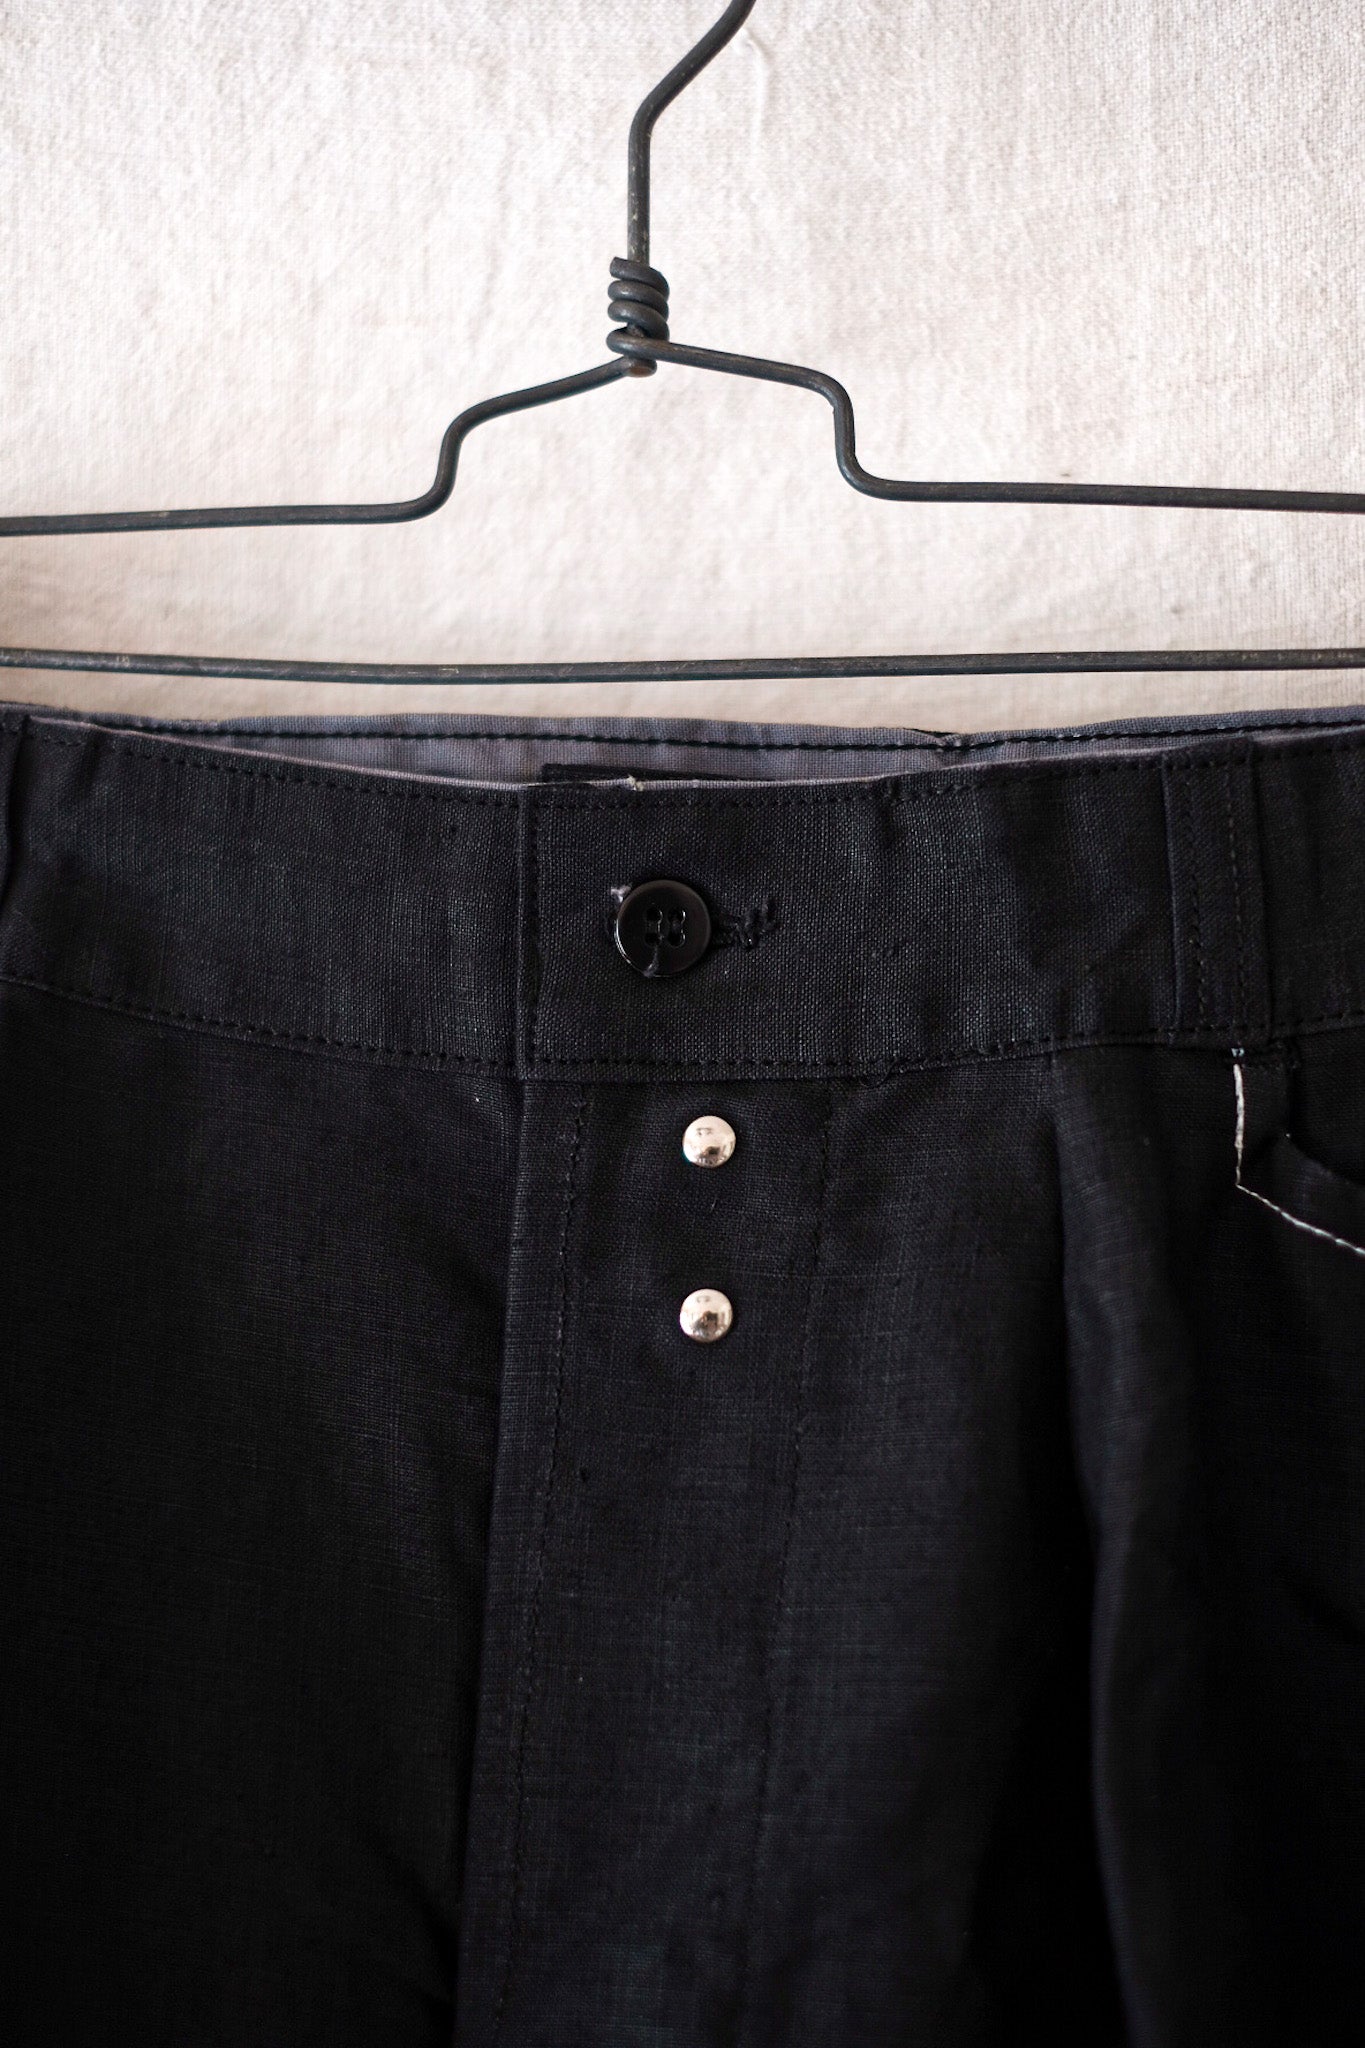 【~50's】French Vintage Black Linen Work Pants "Dead Stock"